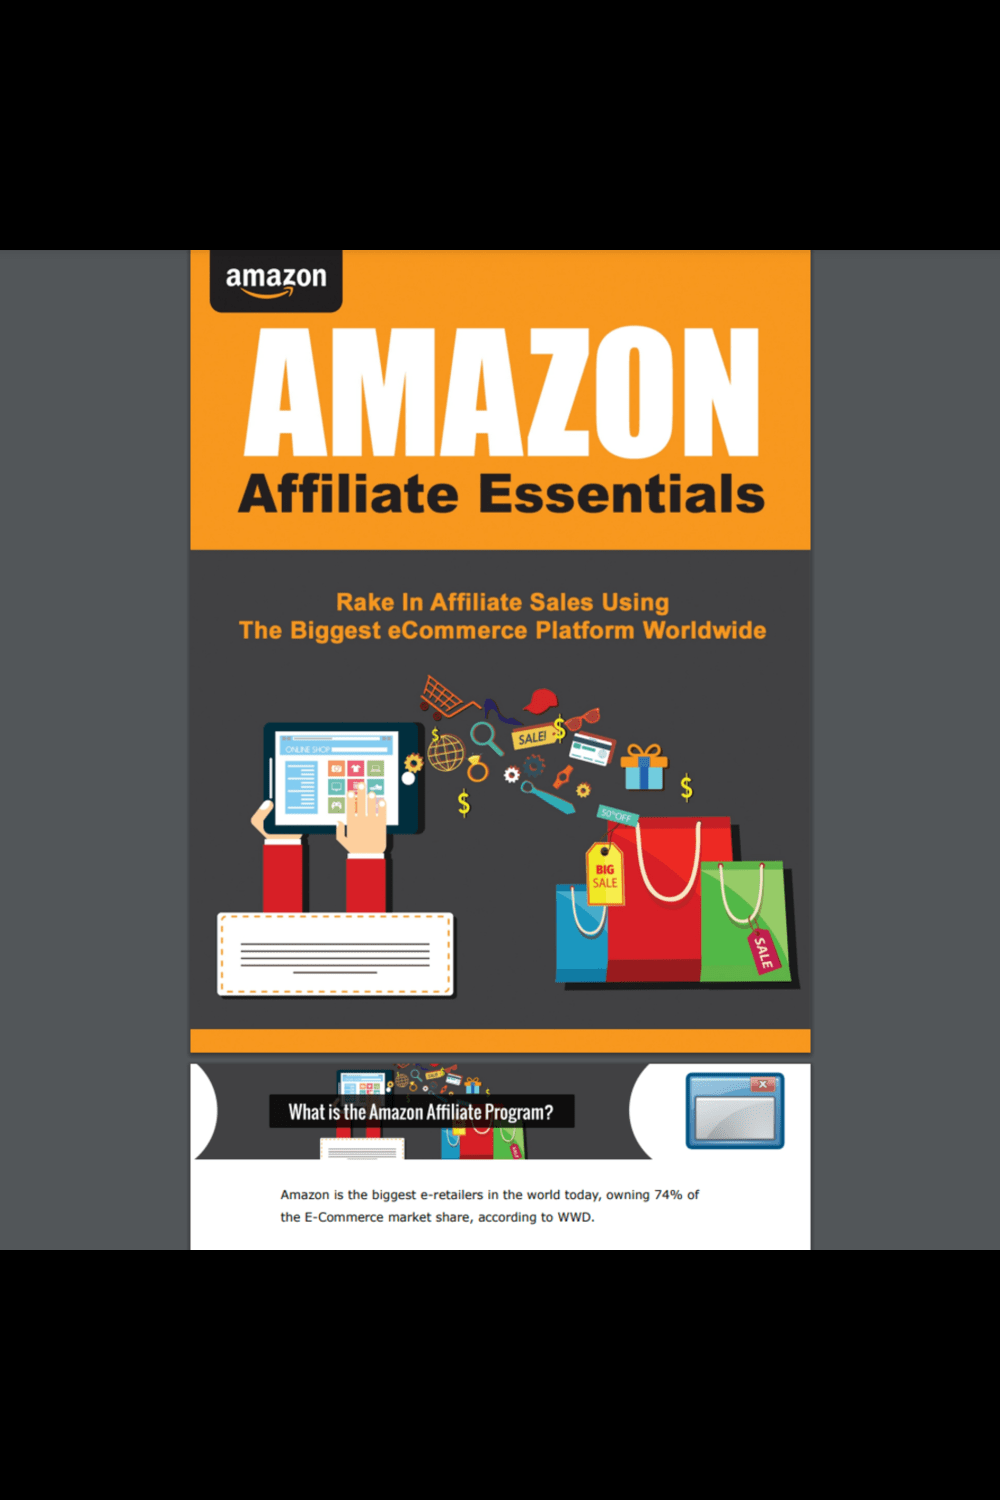 Amazon Affiliate Essentials Marketing Ebook Course Profitable Side Hustle pinterest preview image.